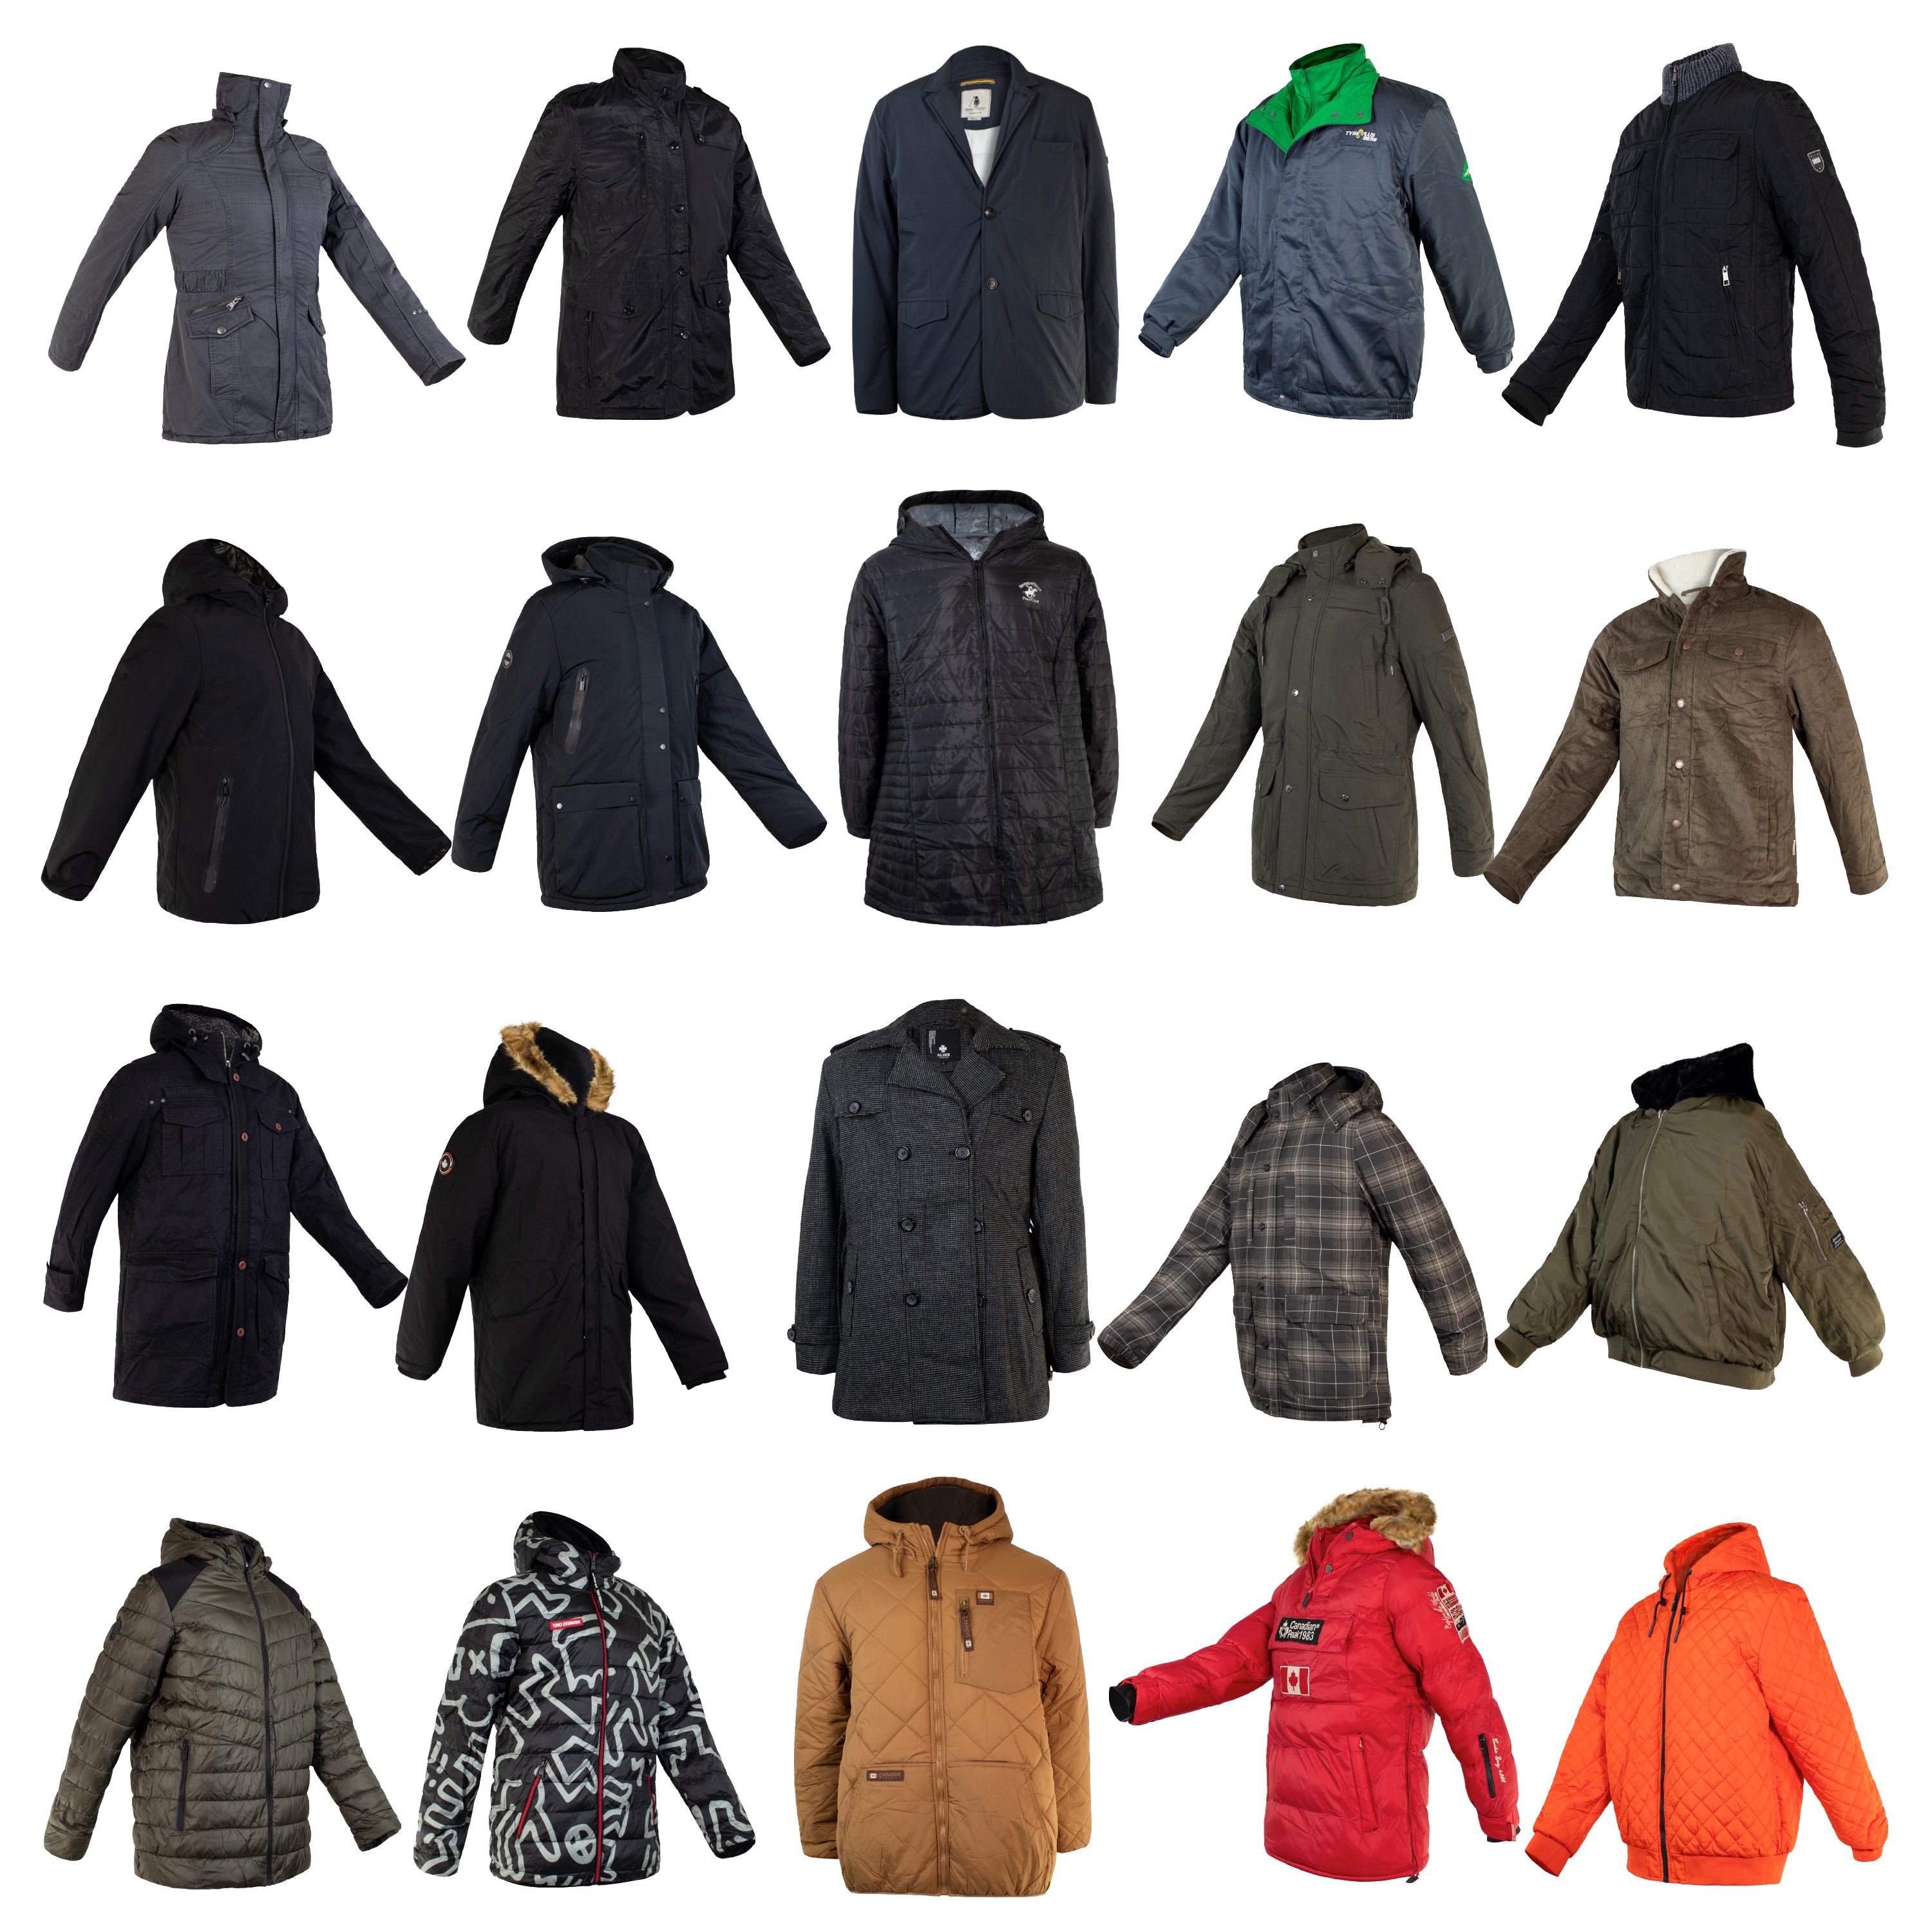 Men's Coats in Assorted Styles & Sizes - Bulk Case of 22 Jackets